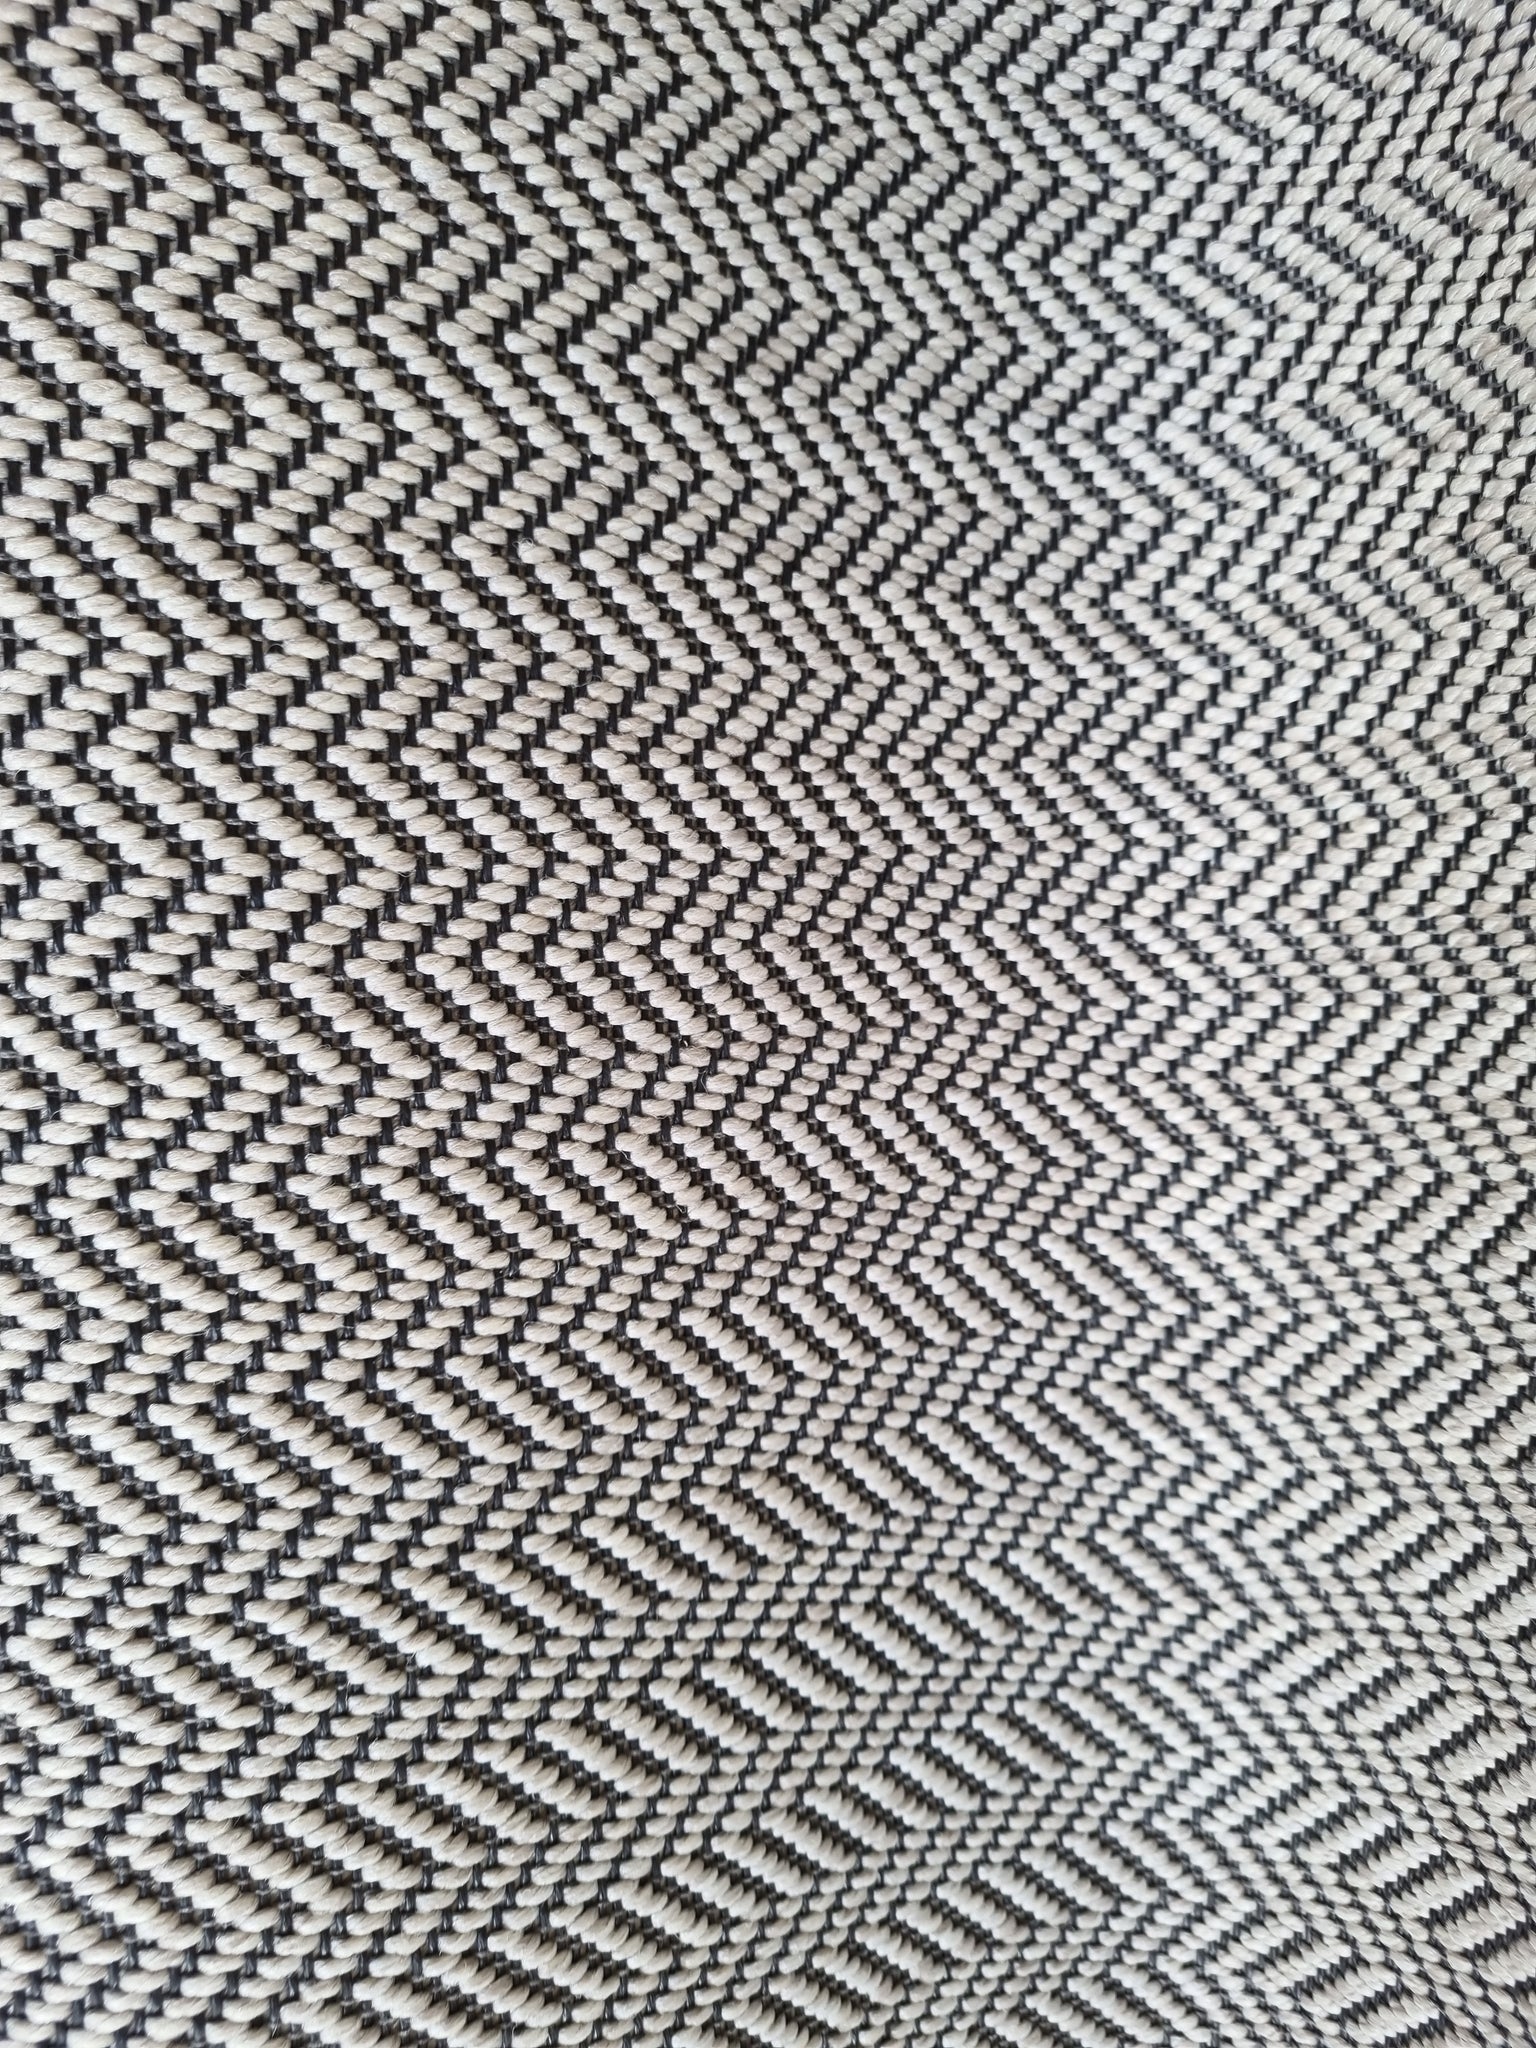 Black & White Herringbone Faux Sisal Carpet Stair Runner Gun Metal Grey Cotton border